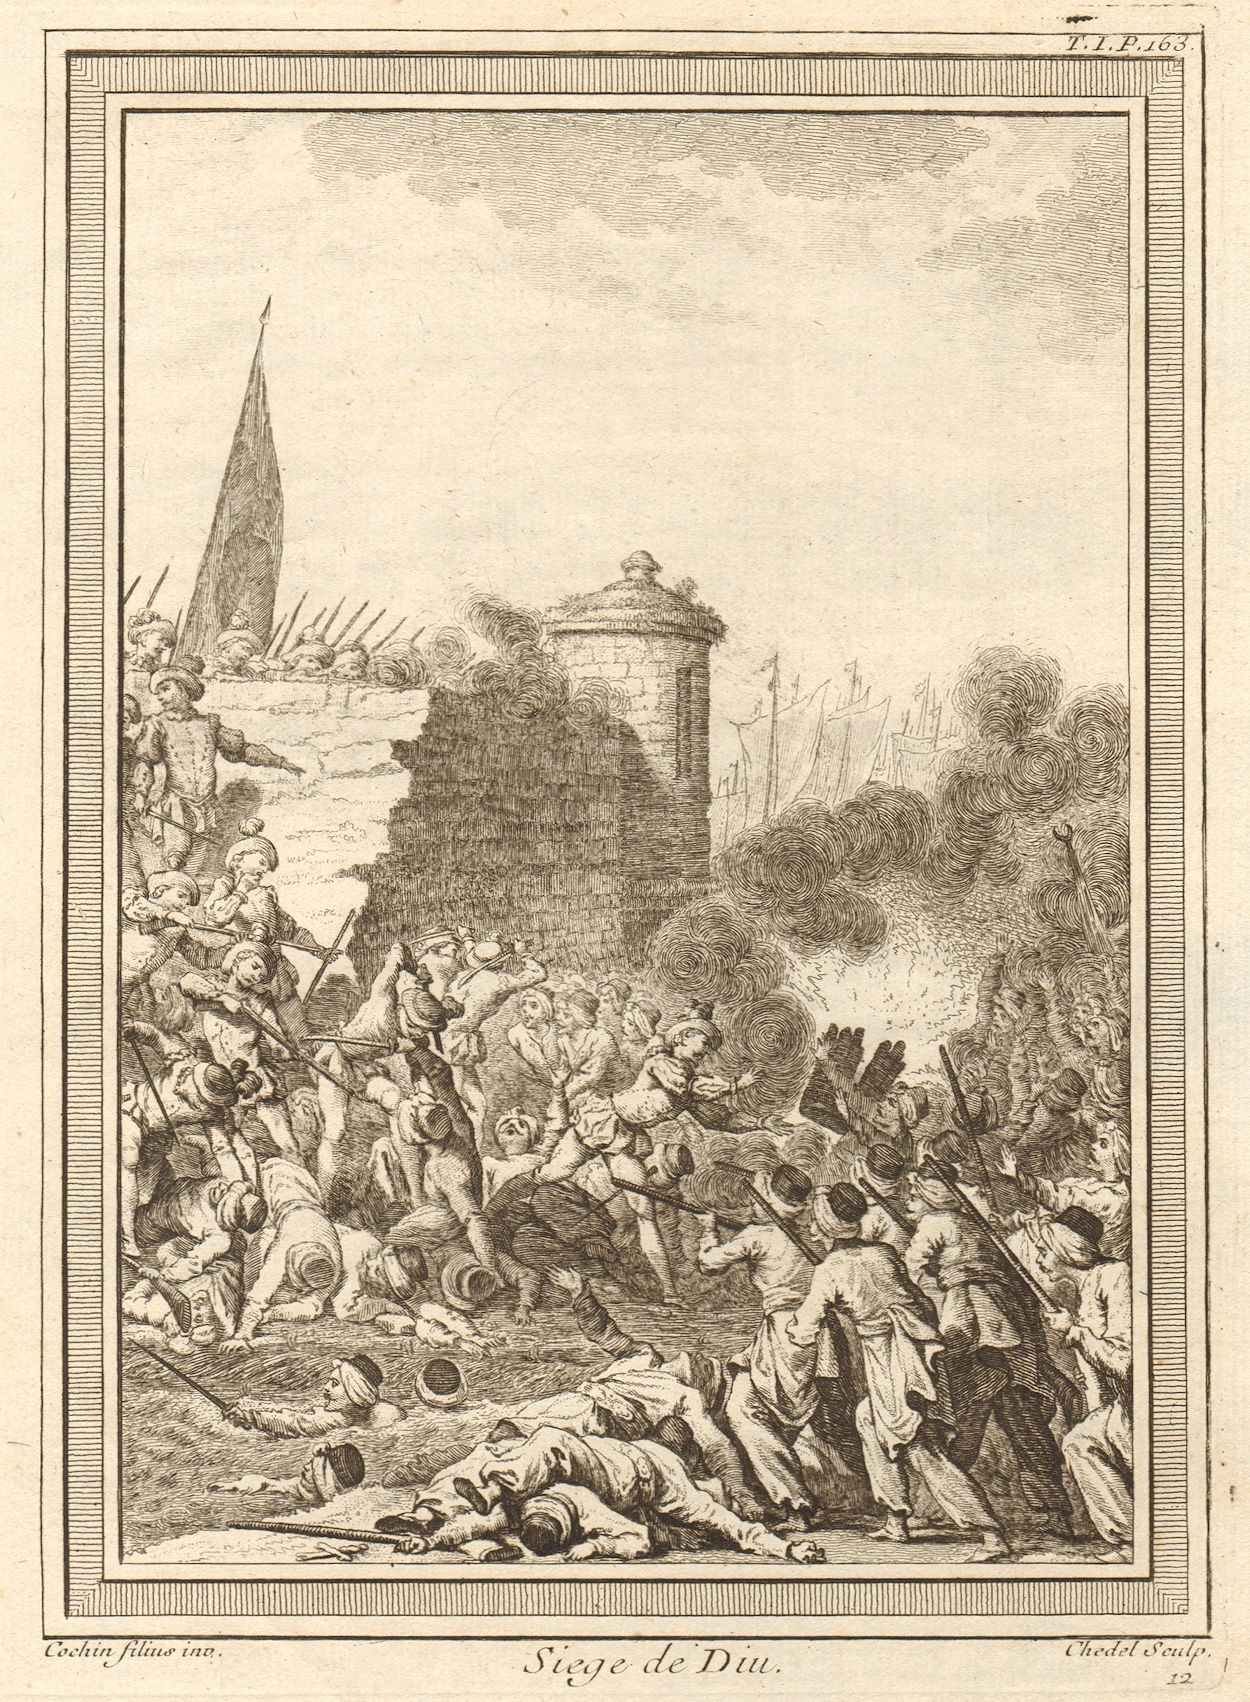 'Siege de Diu'. India. The siege of Diu. 1538, 1546. Daman & Diu 1746 print